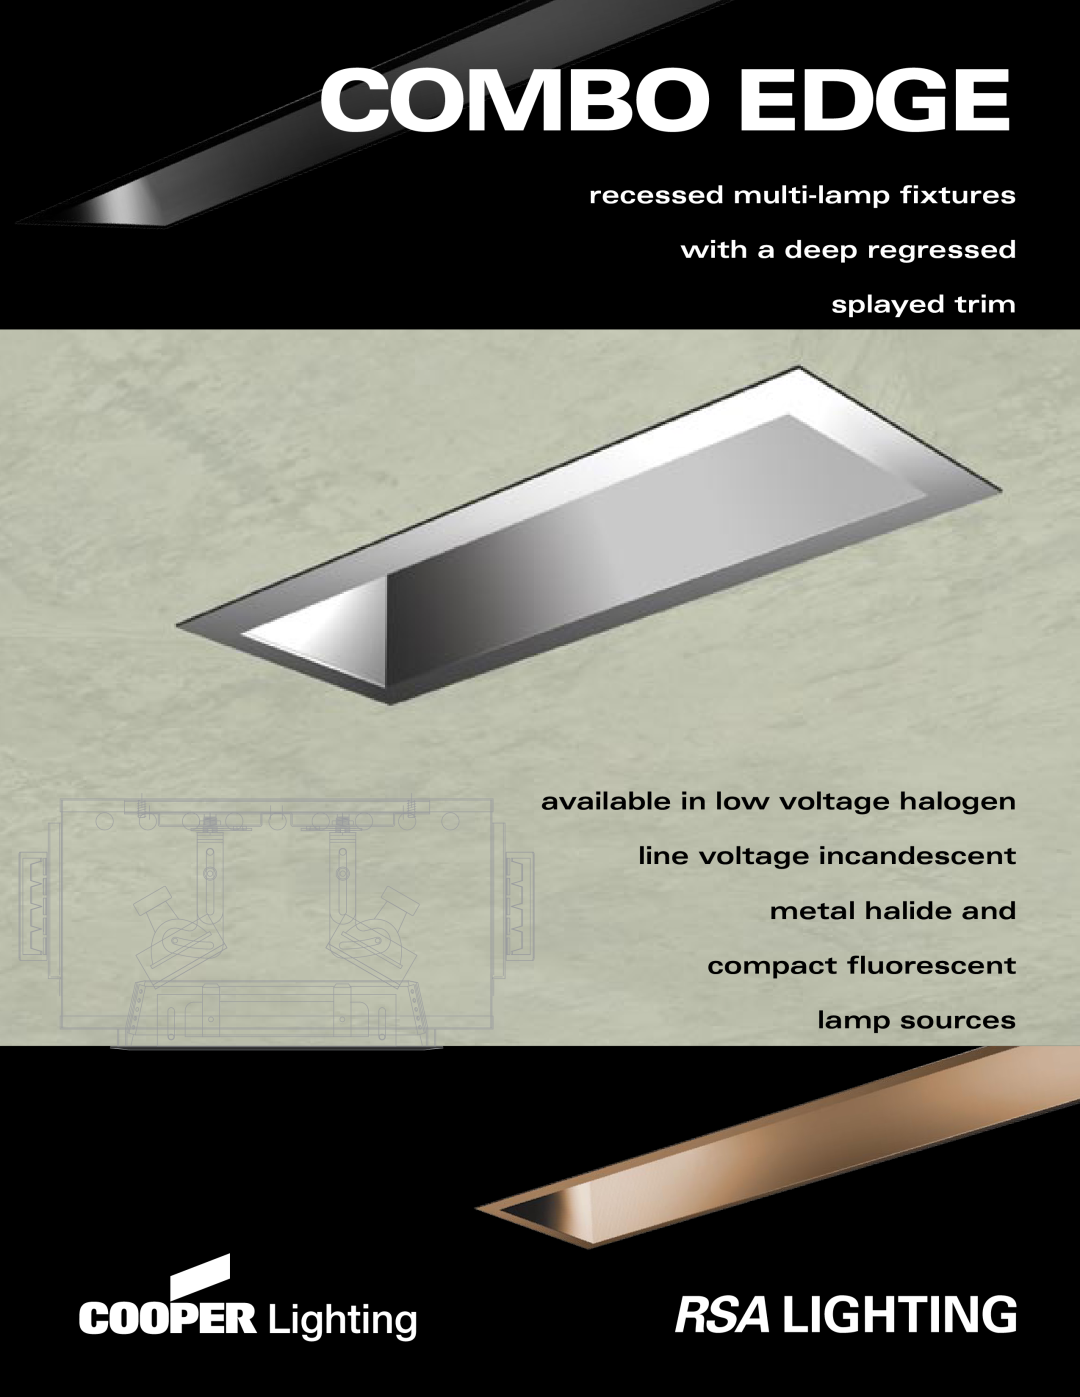 Cooper Lighting Combo Edge manual recessed multi-lamp fixtures with a deep regressed splayed trim, metal halide and 